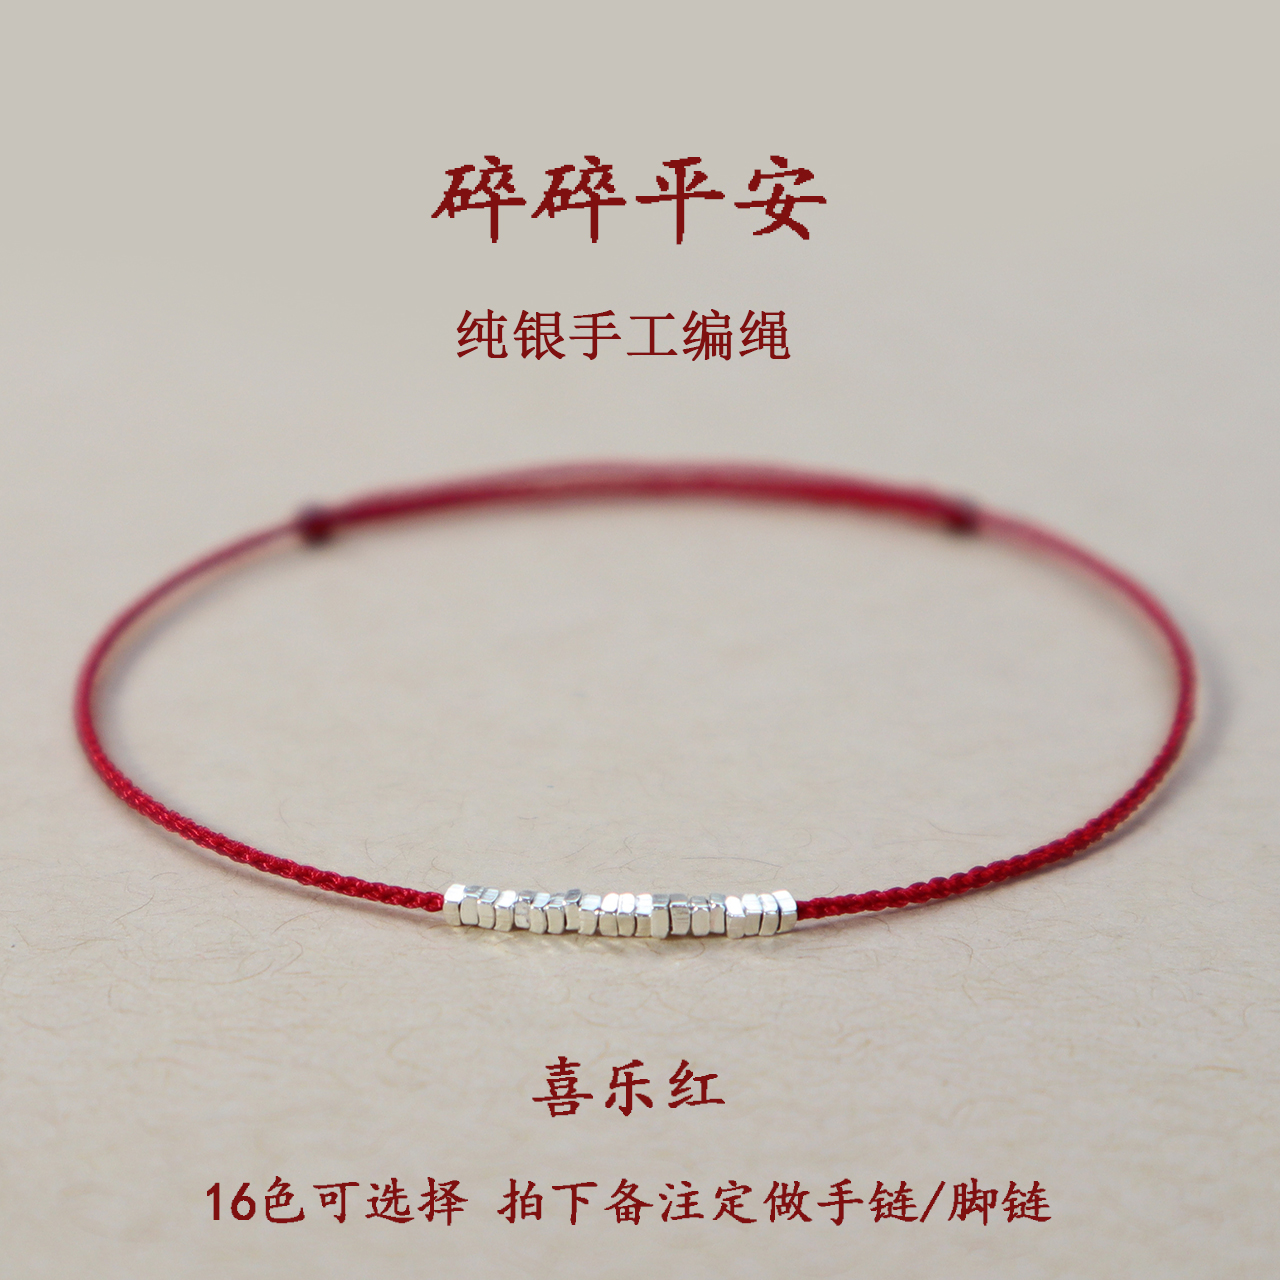 100 lapped pure silver Broken Silver Bracelet Women Ins brief Little crowddesign Delicate Bracelet Handmade Ben Year Red Rope Foot Chain-Taobao